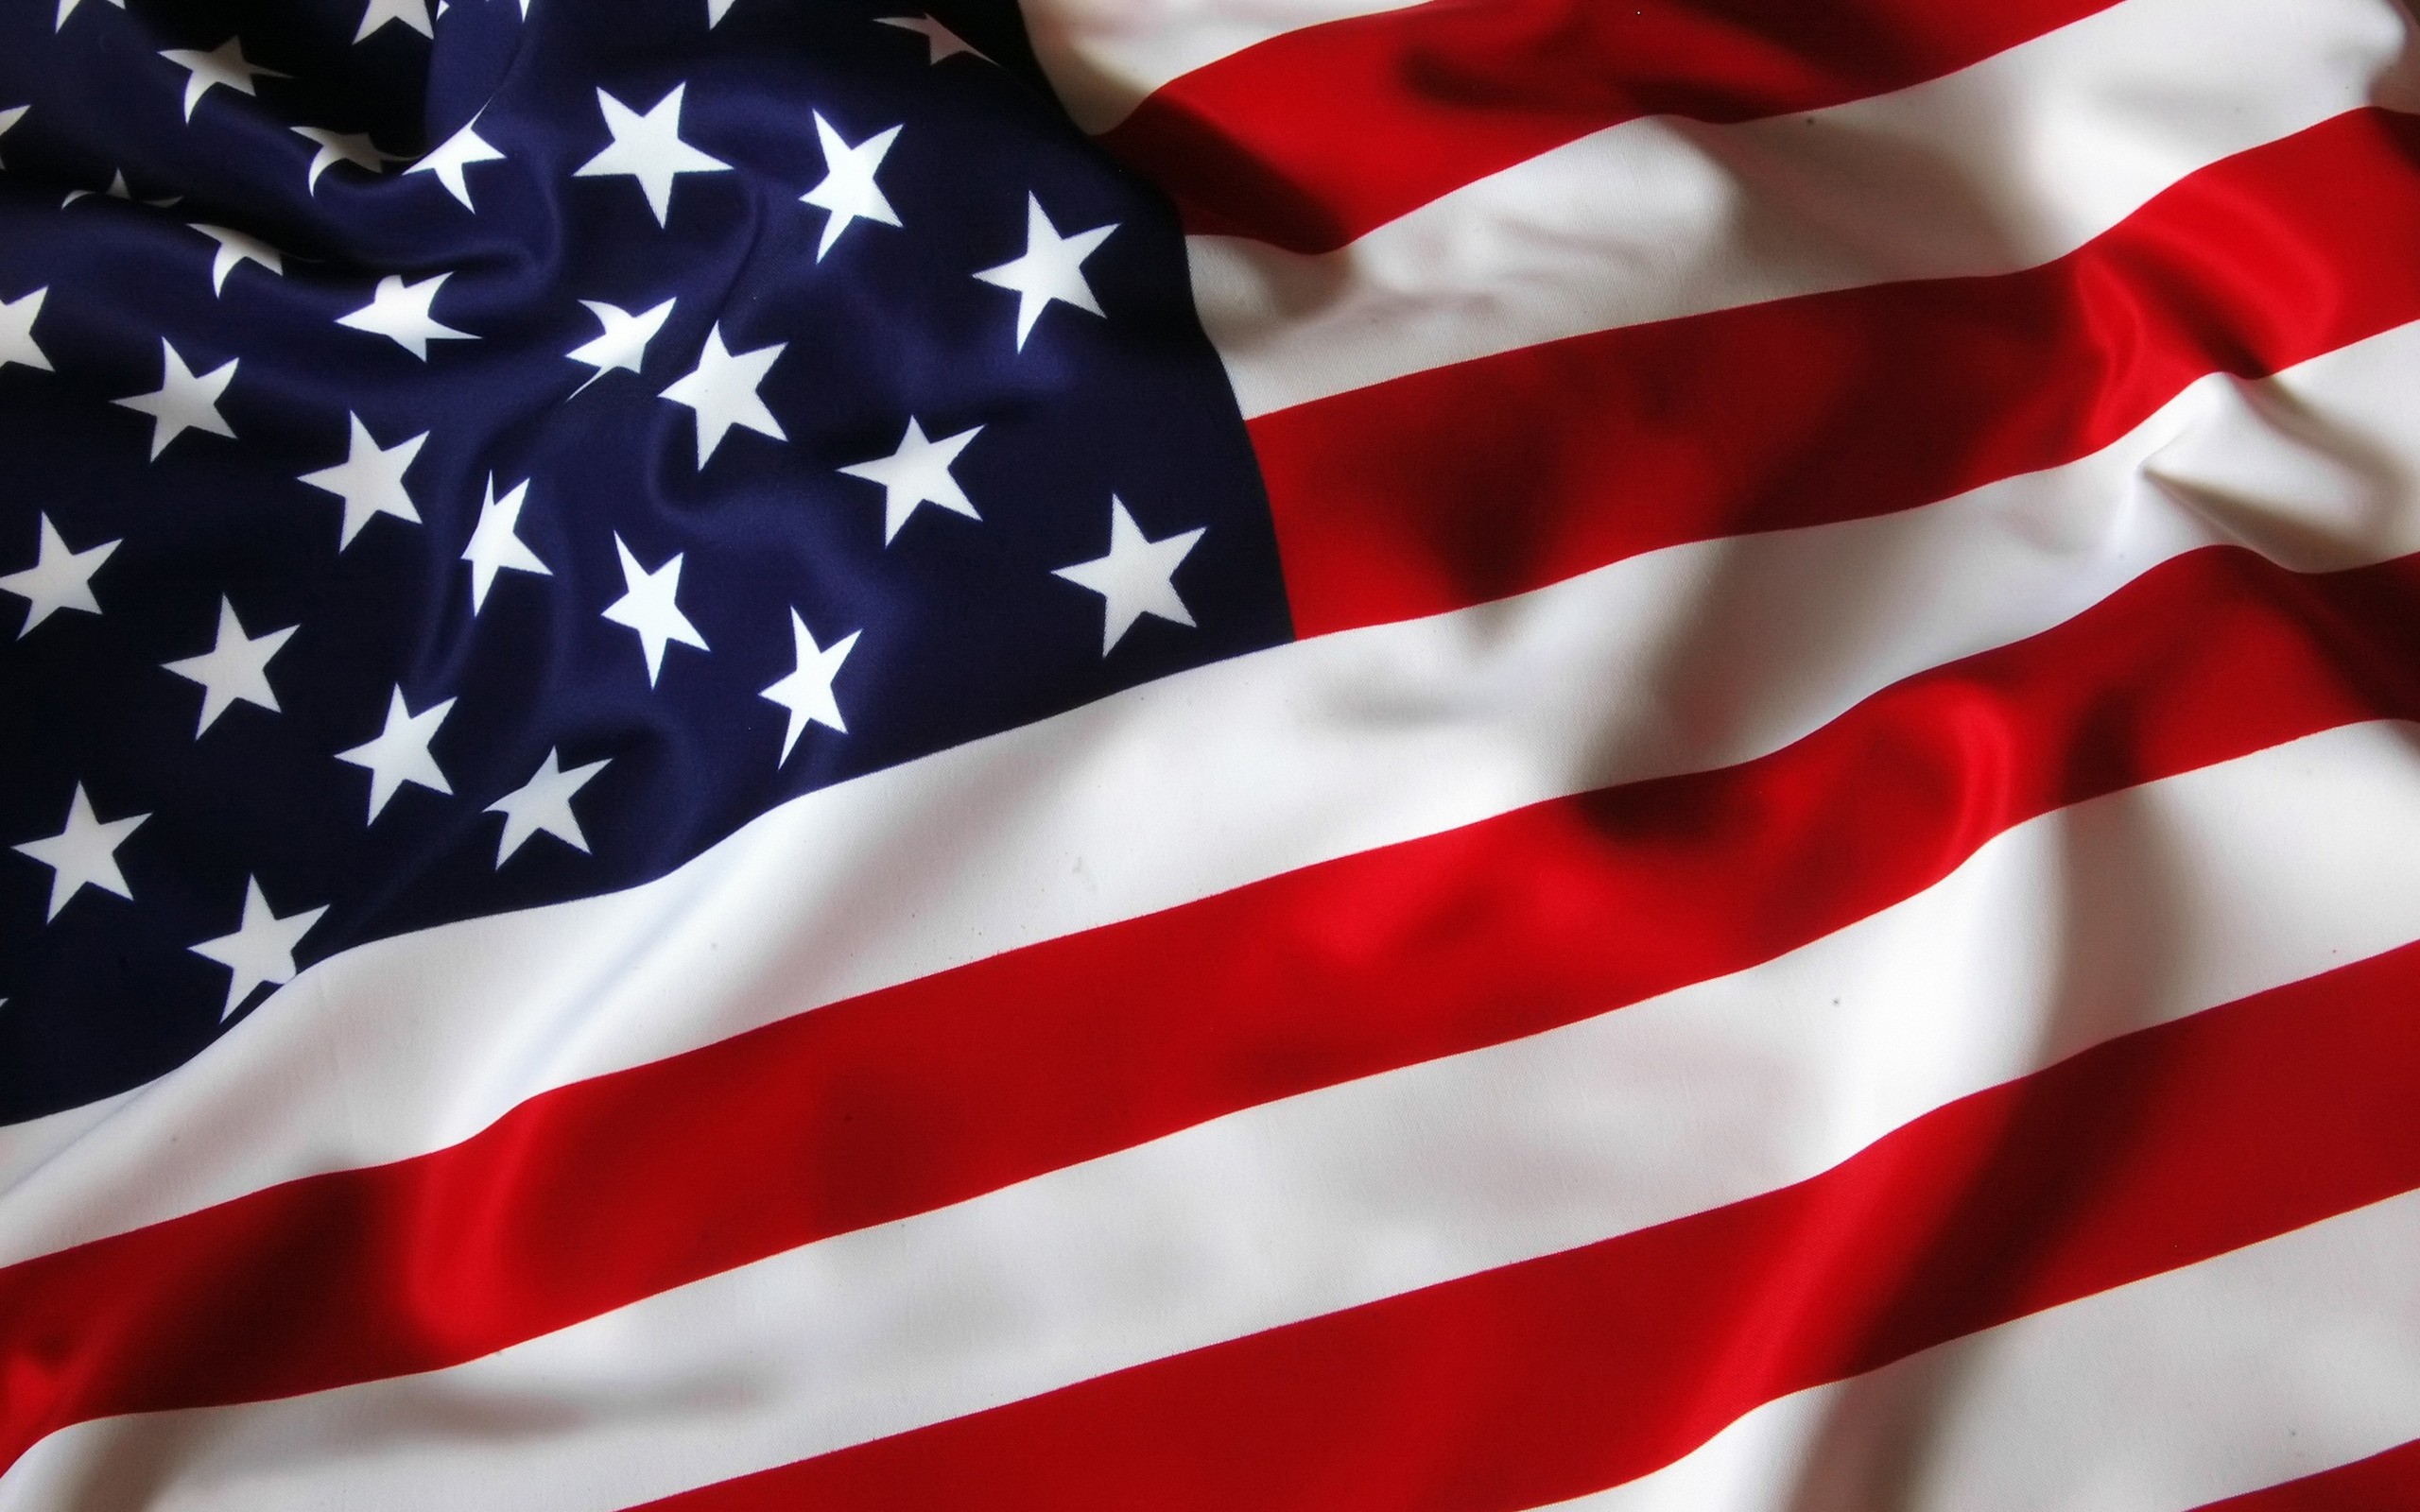 Usa Memorial Day Flags Image Wallpaper Photos For